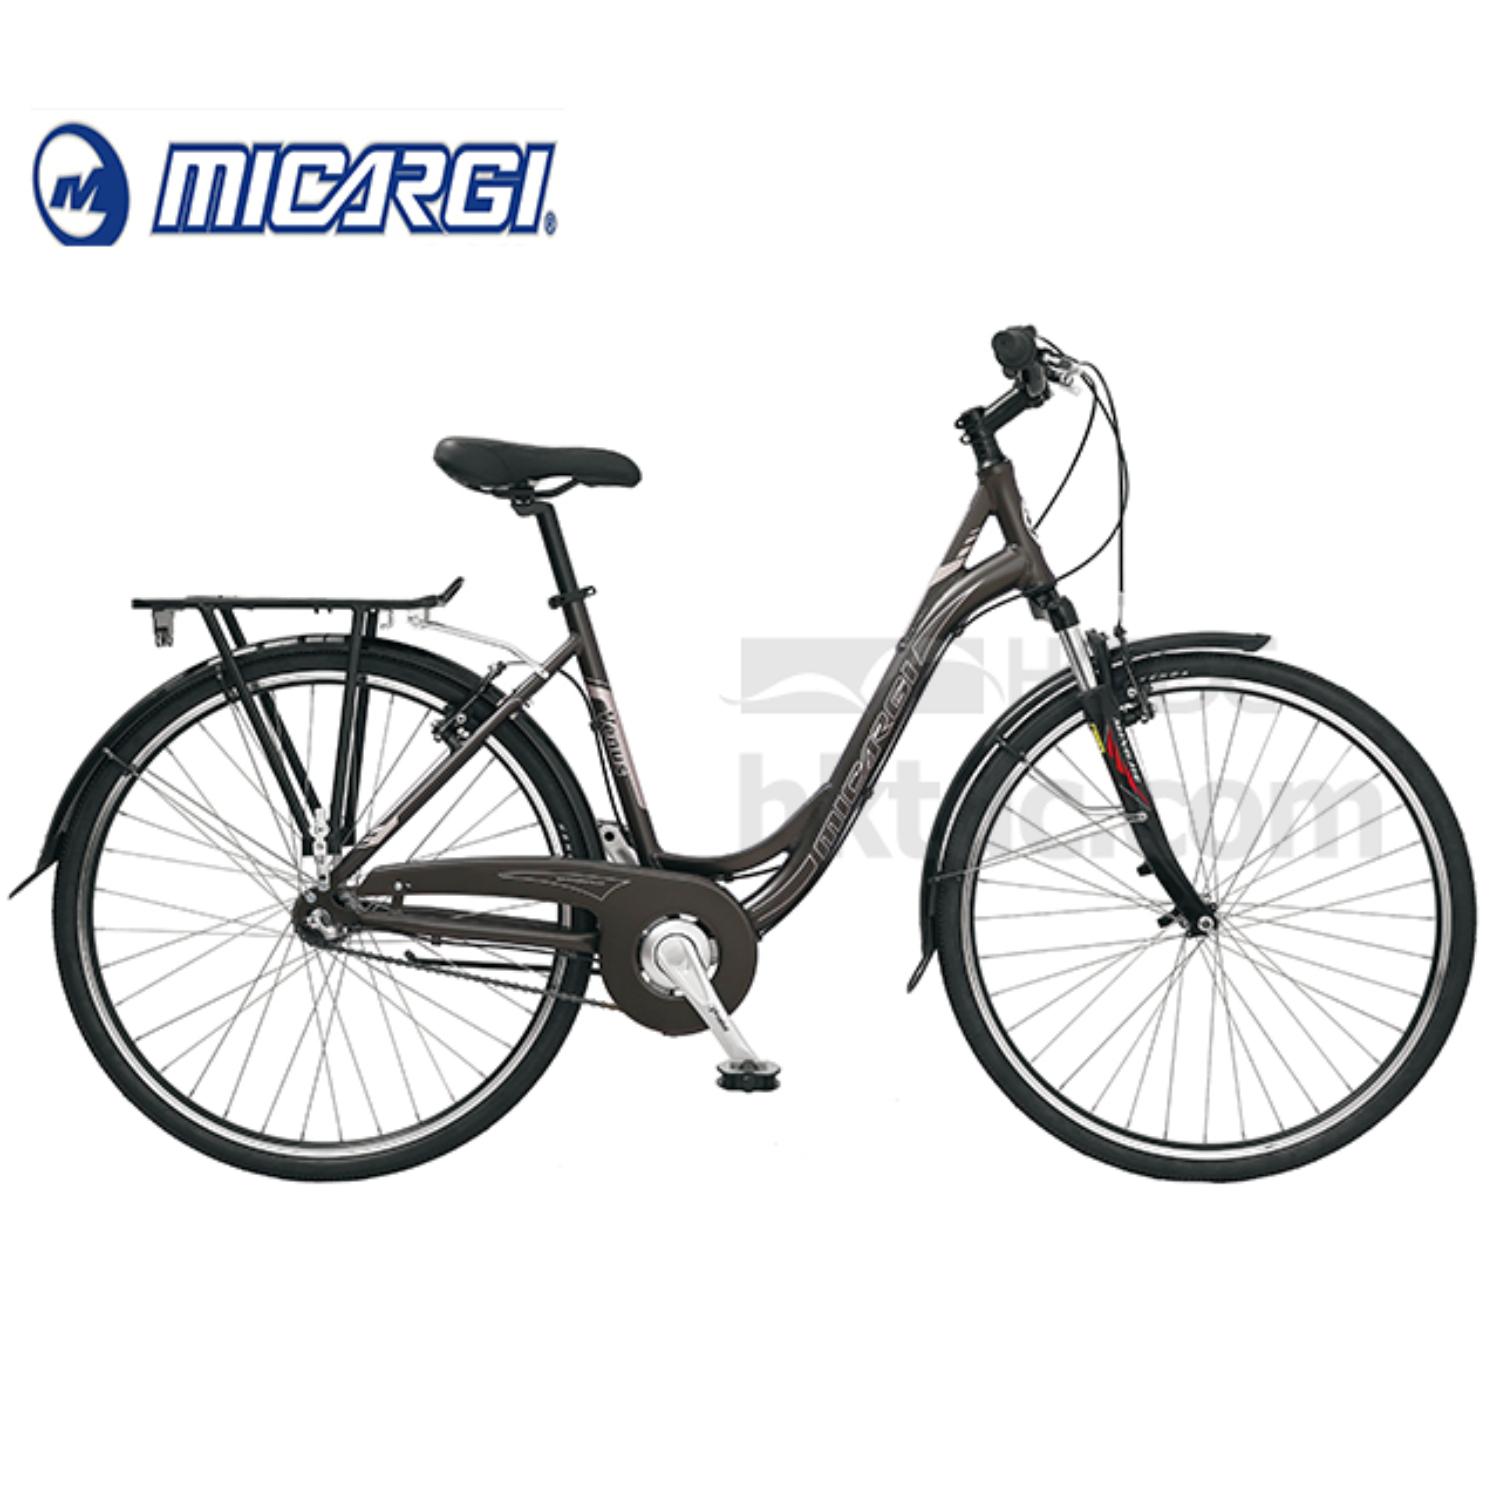 micargi hybrid bike